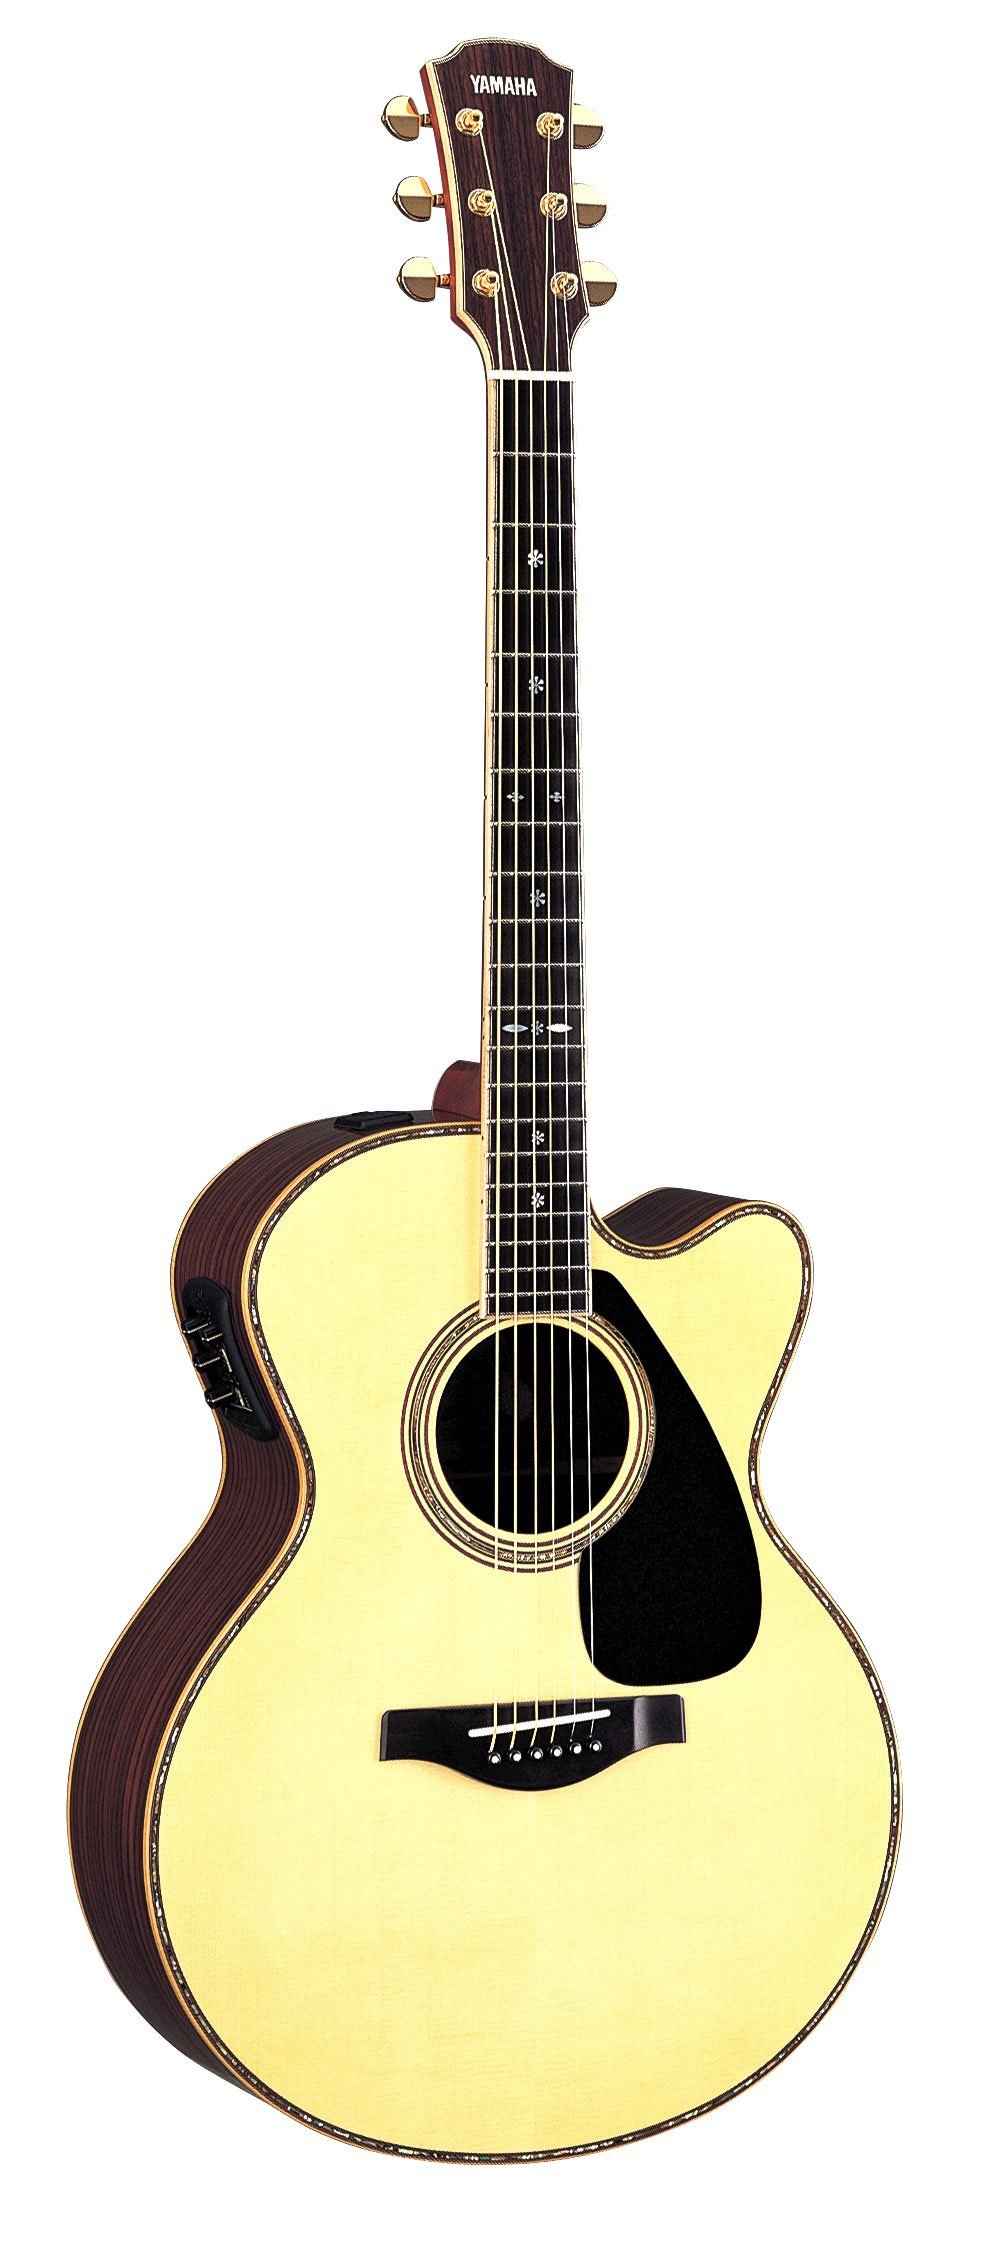 LJX36C - Overview - Acoustic Guitars - Guitars, Basses & Amps - Musical